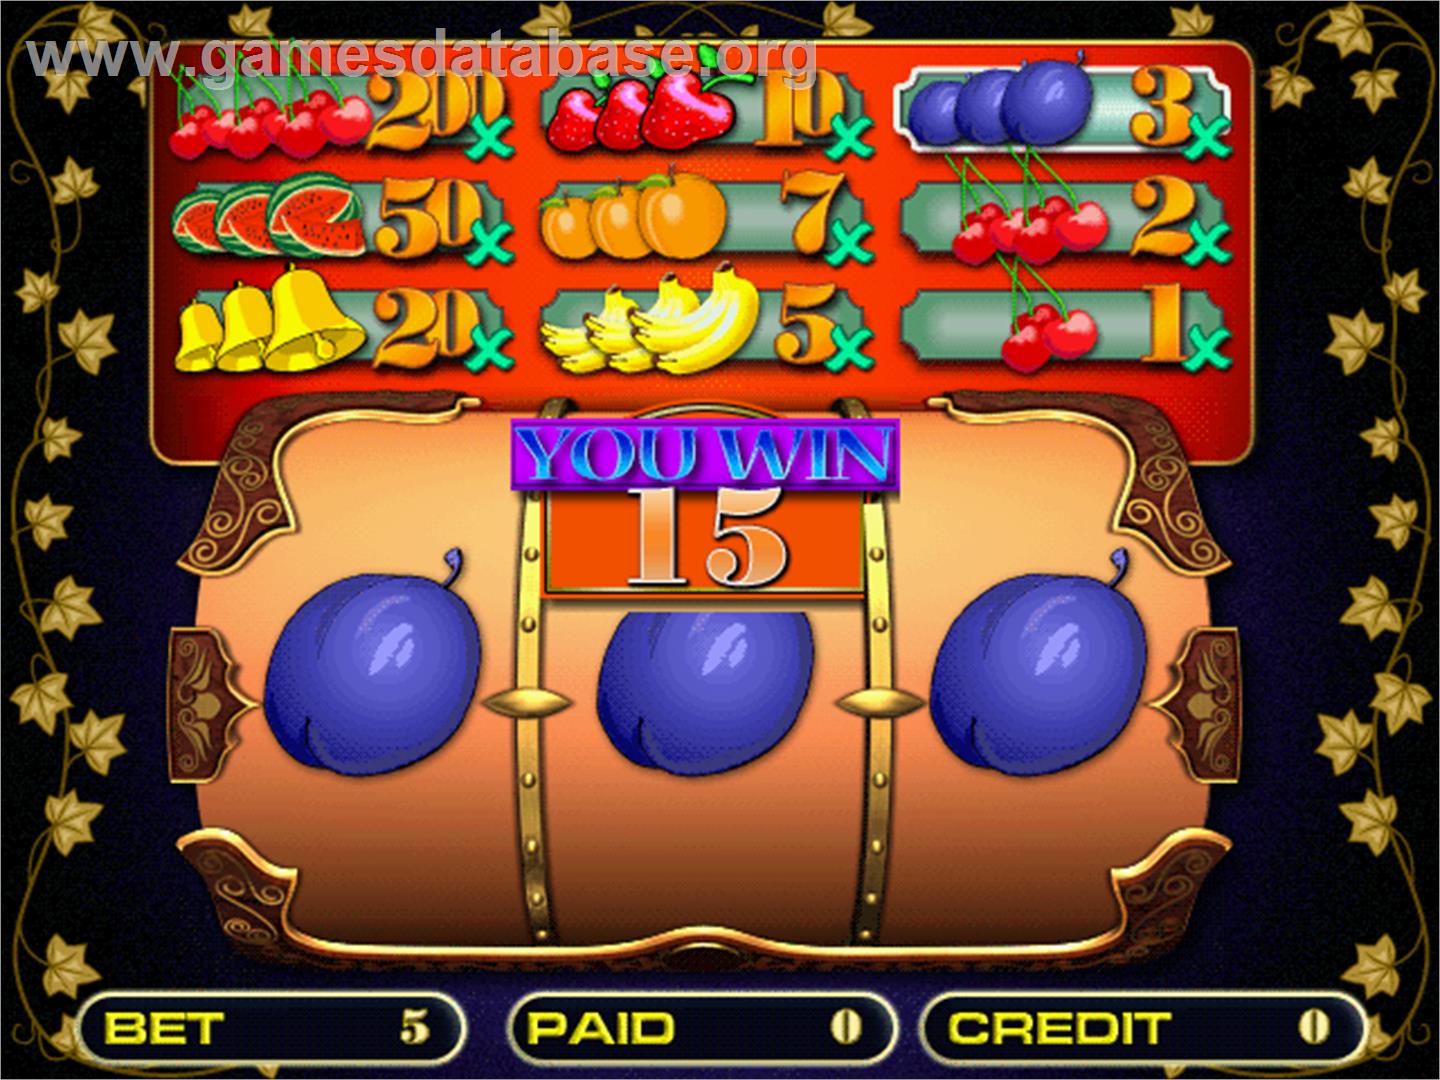 Roll Fruit - Arcade - Artwork - In Game